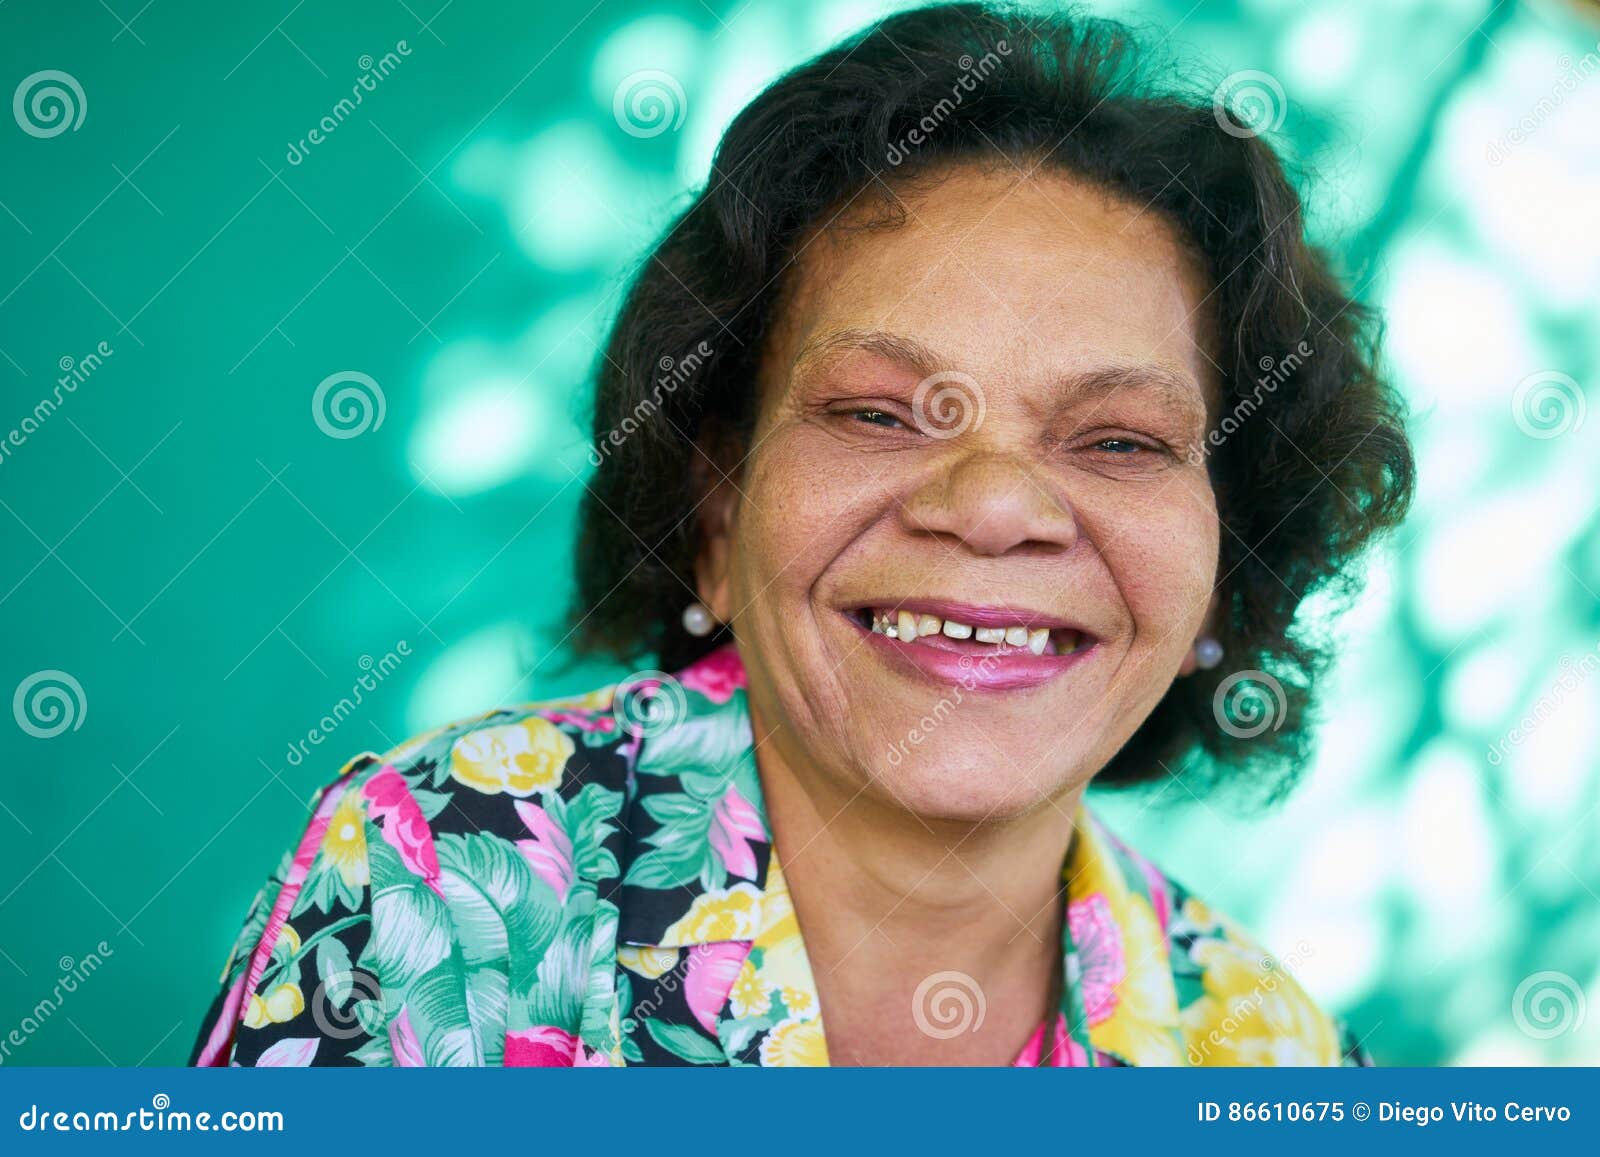 real people portrait funny senior woman hispanic lady smiling